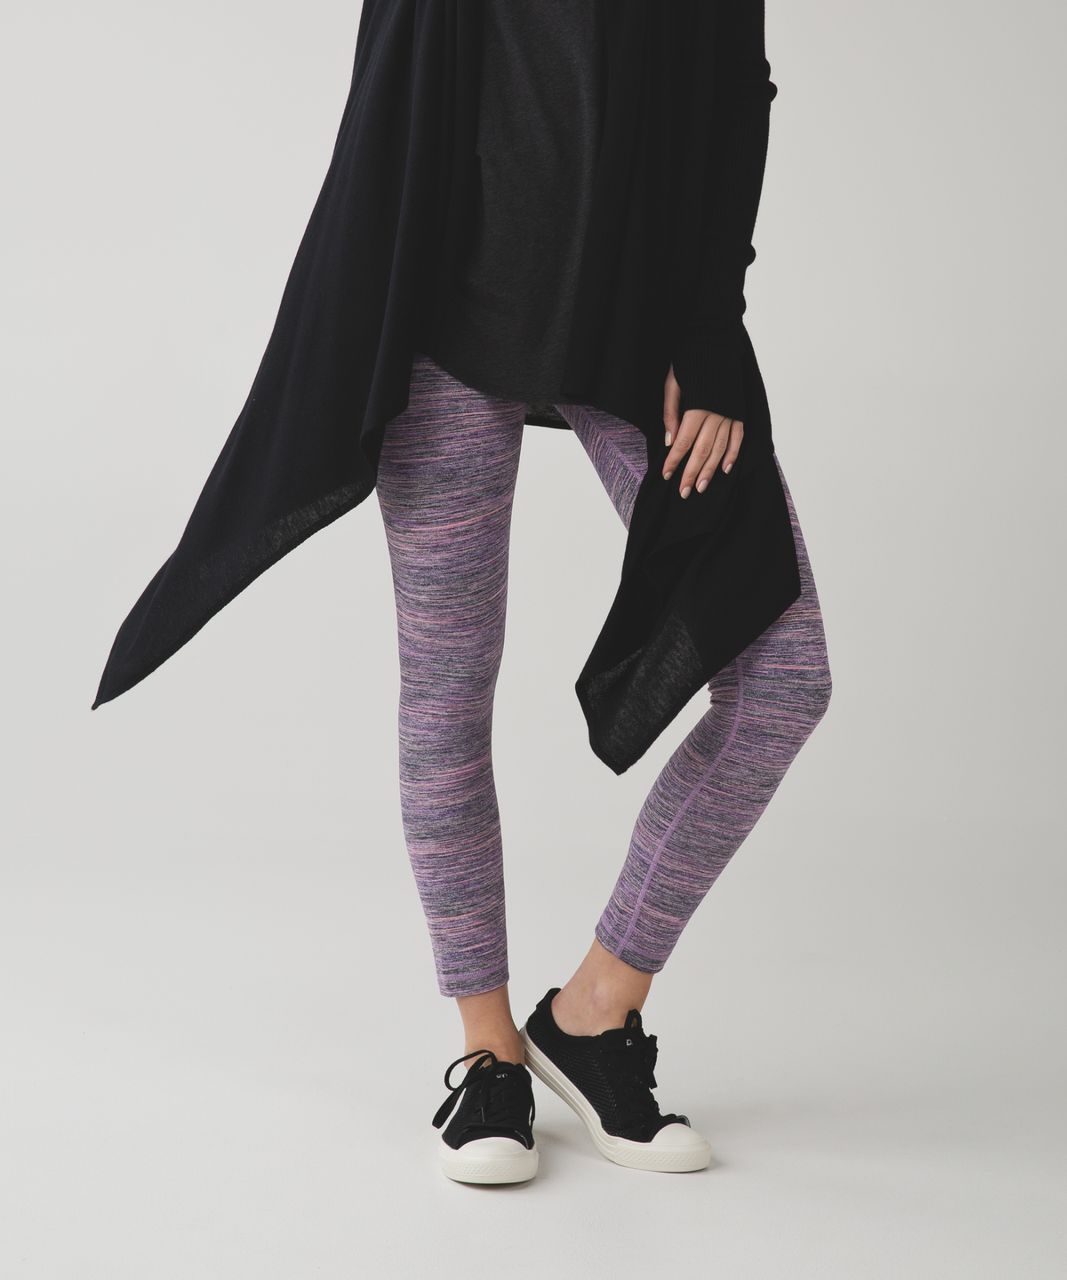 Lululemon High Times Pant - Space Dye Camo Tender Violet Black Grape